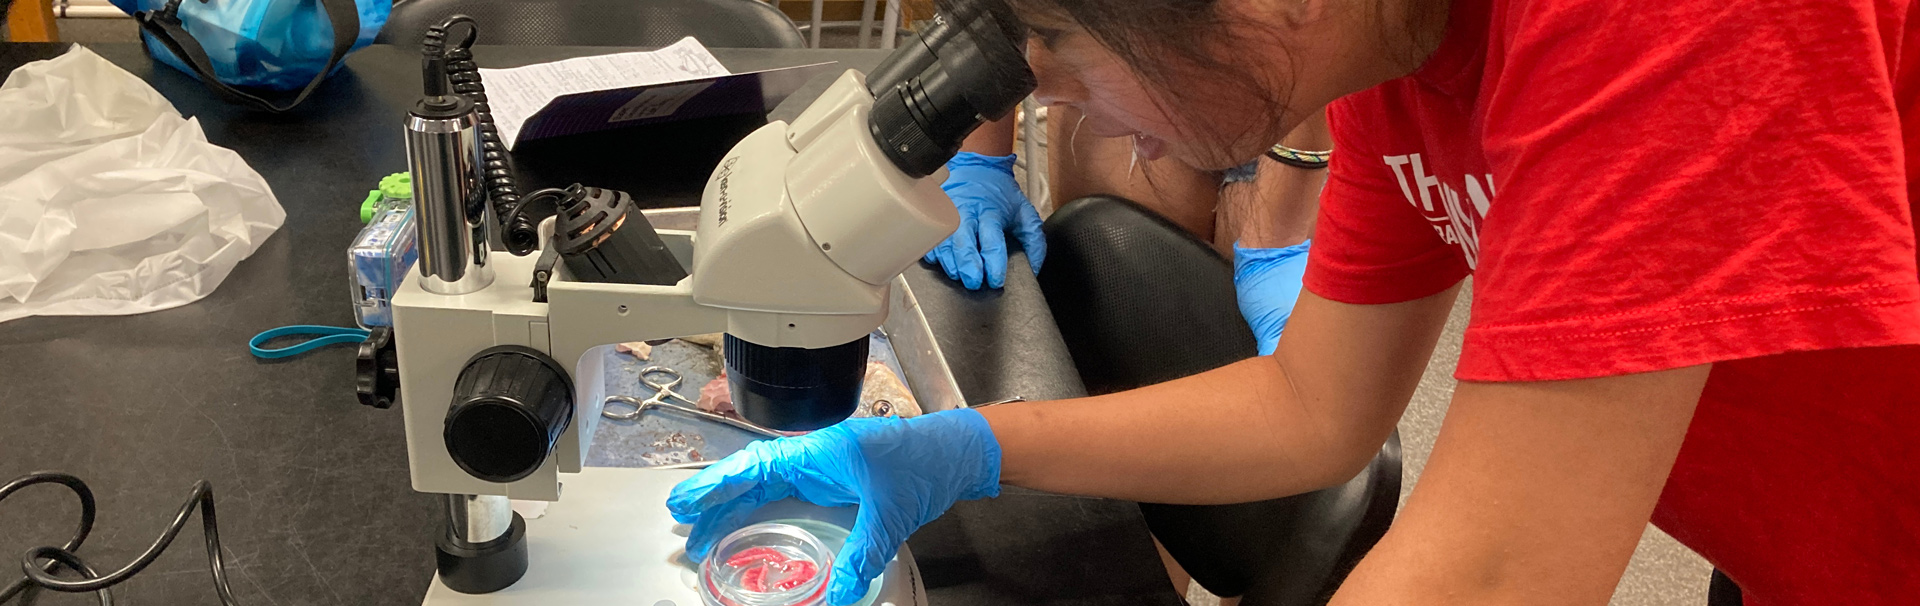 Student examines fish guts under microscope